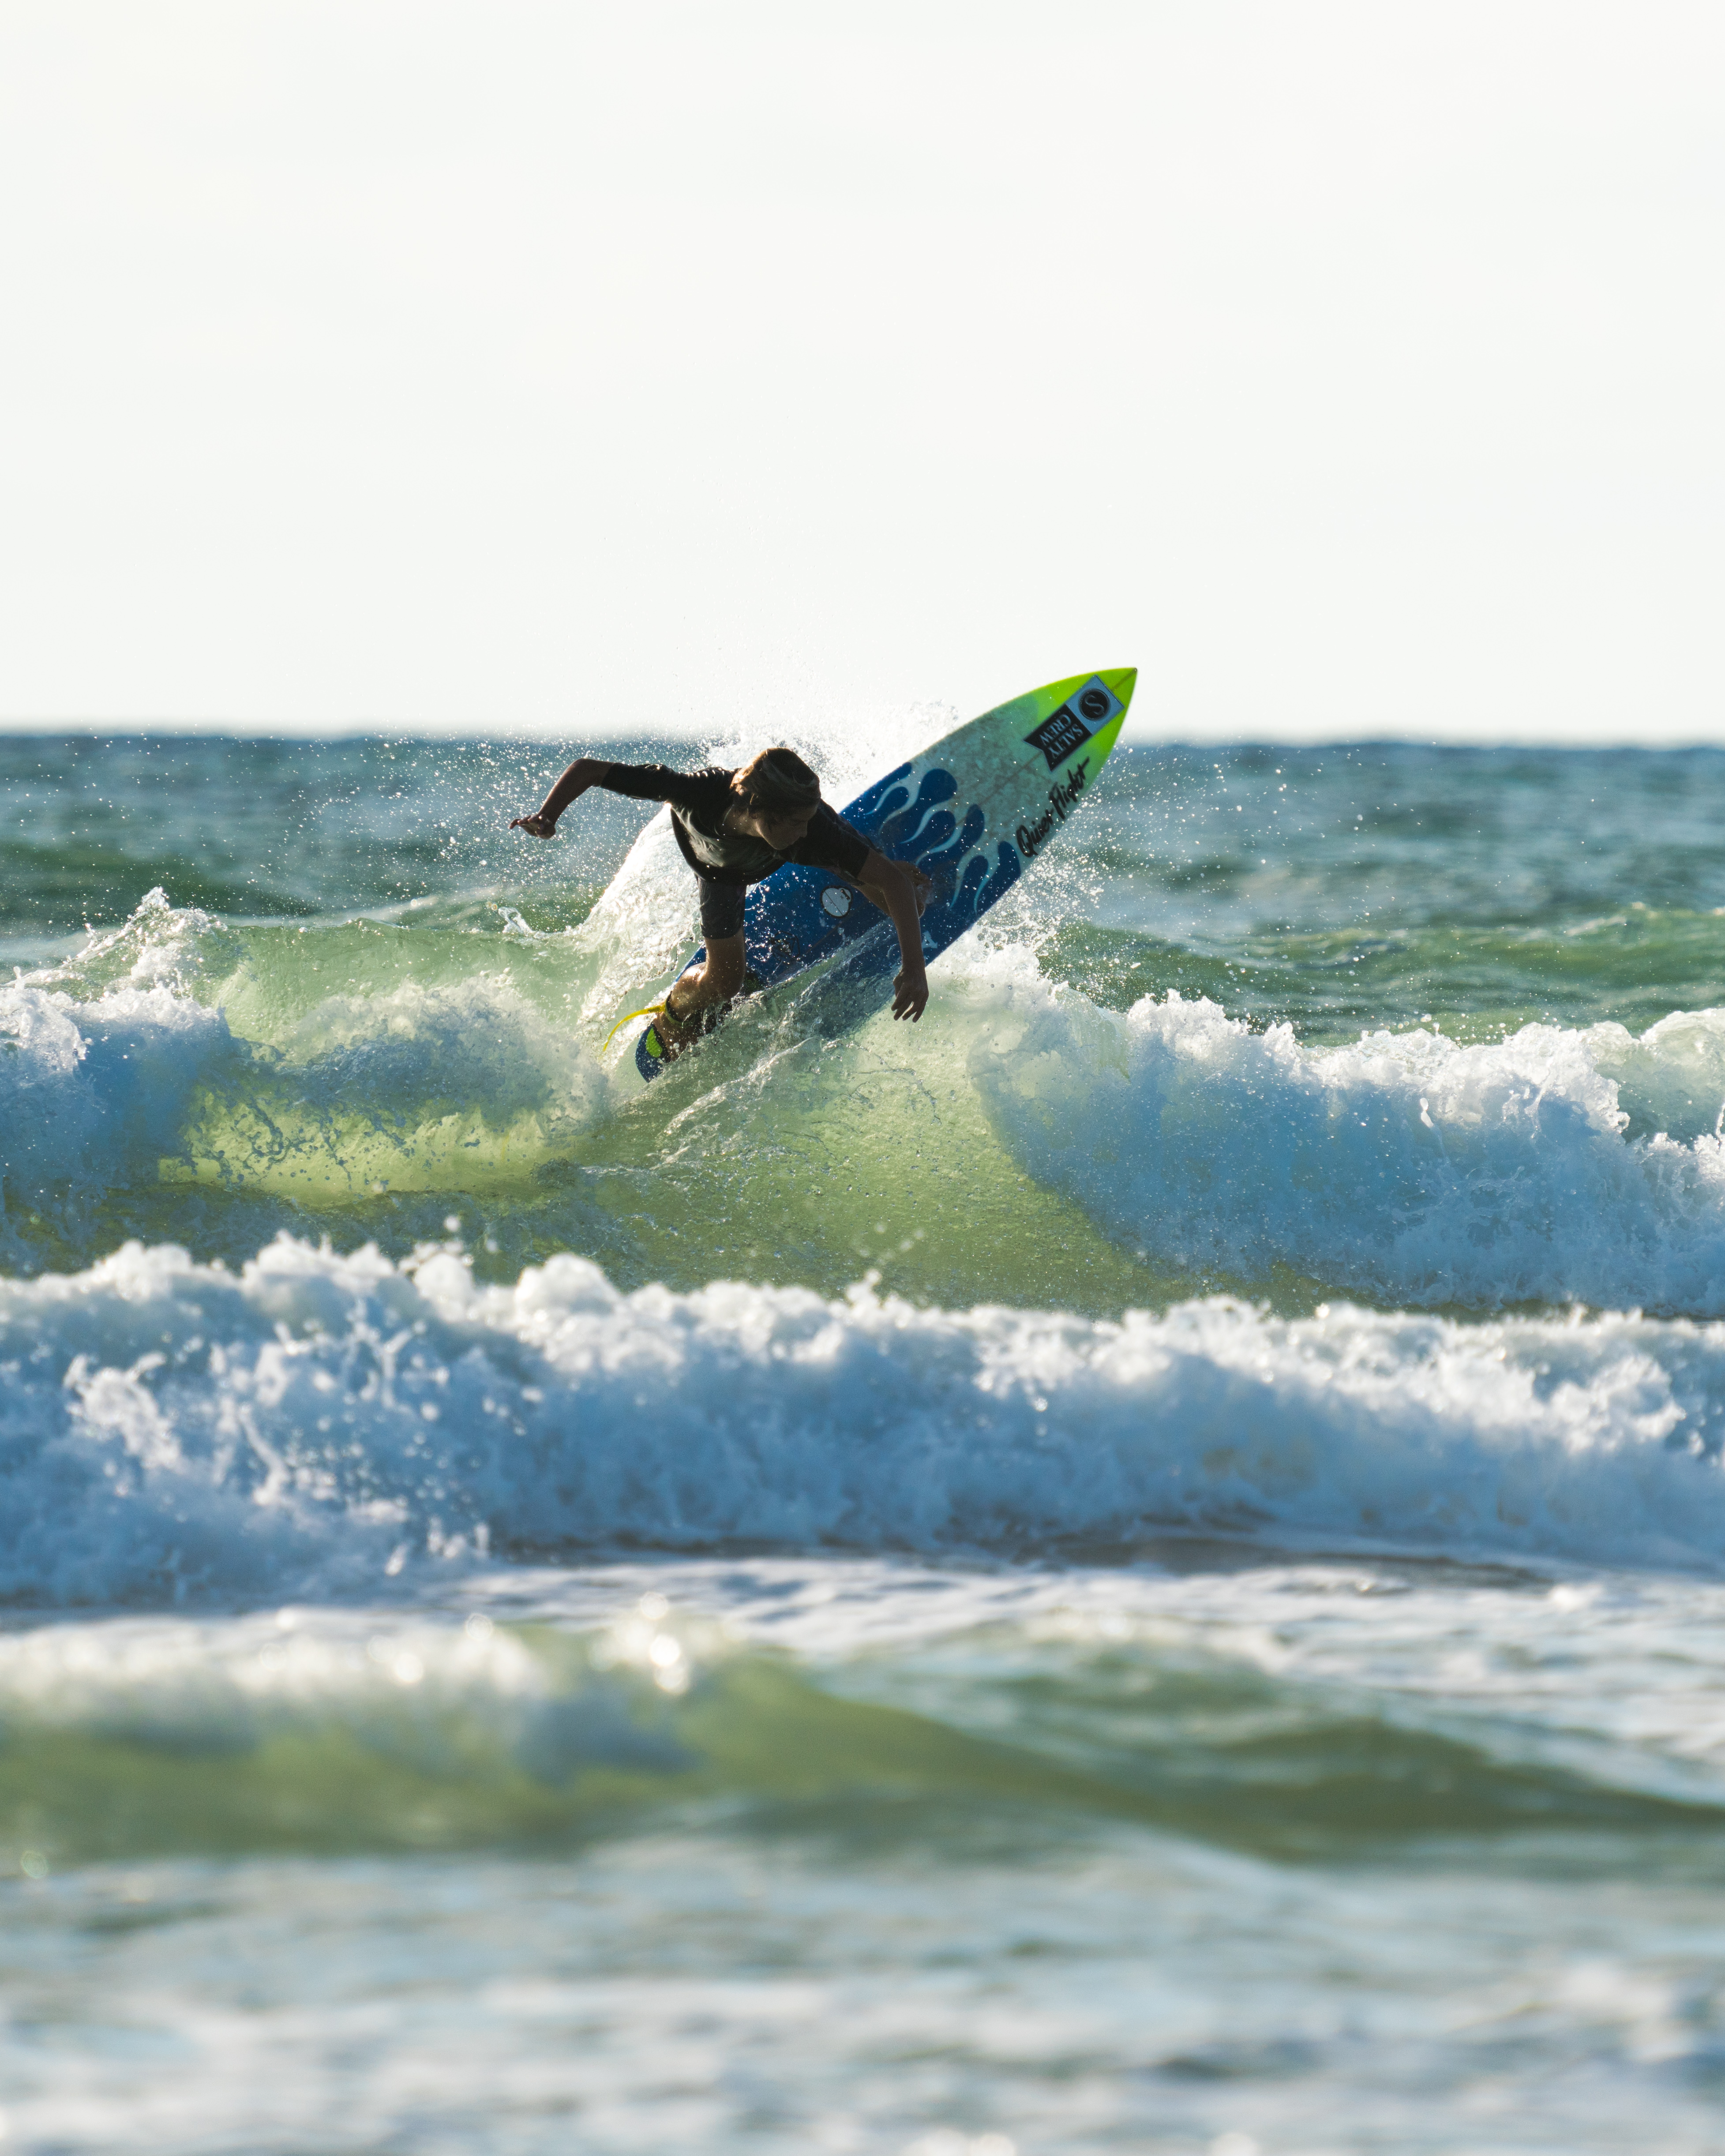 New Smyrna Beach Florida July 19 Staugsurf Surf Station Surf Report